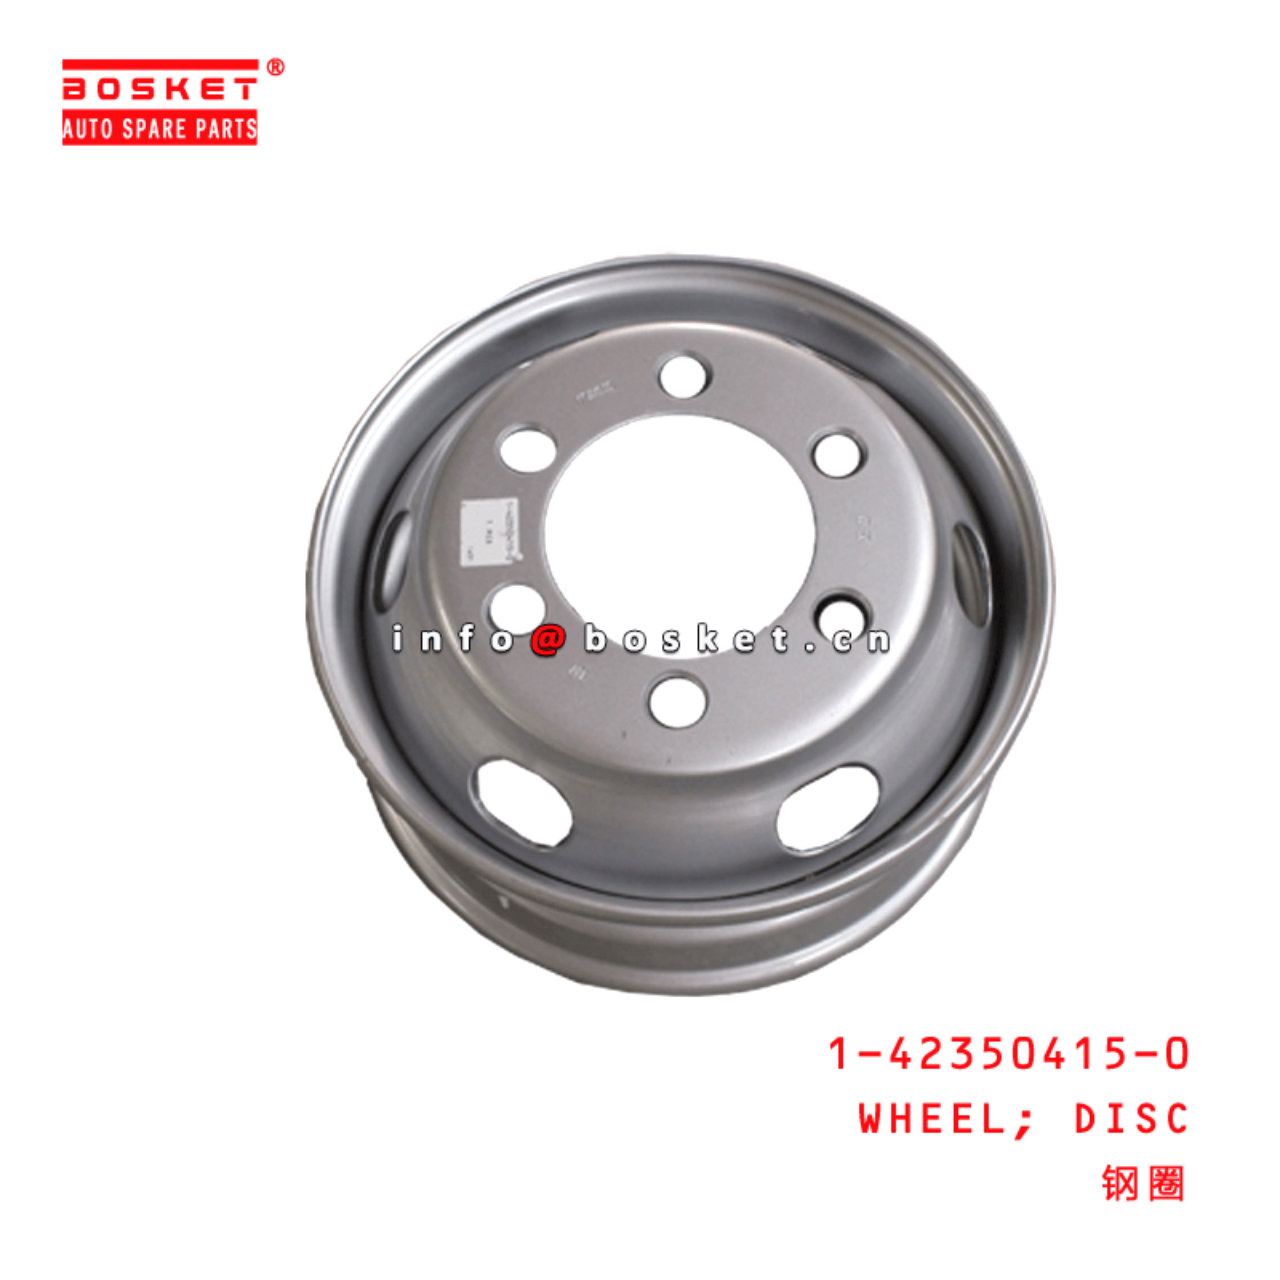 1-42350415-0 Disc Wheel 1423504150 Suitable for ISUZU NPR NPS NQR